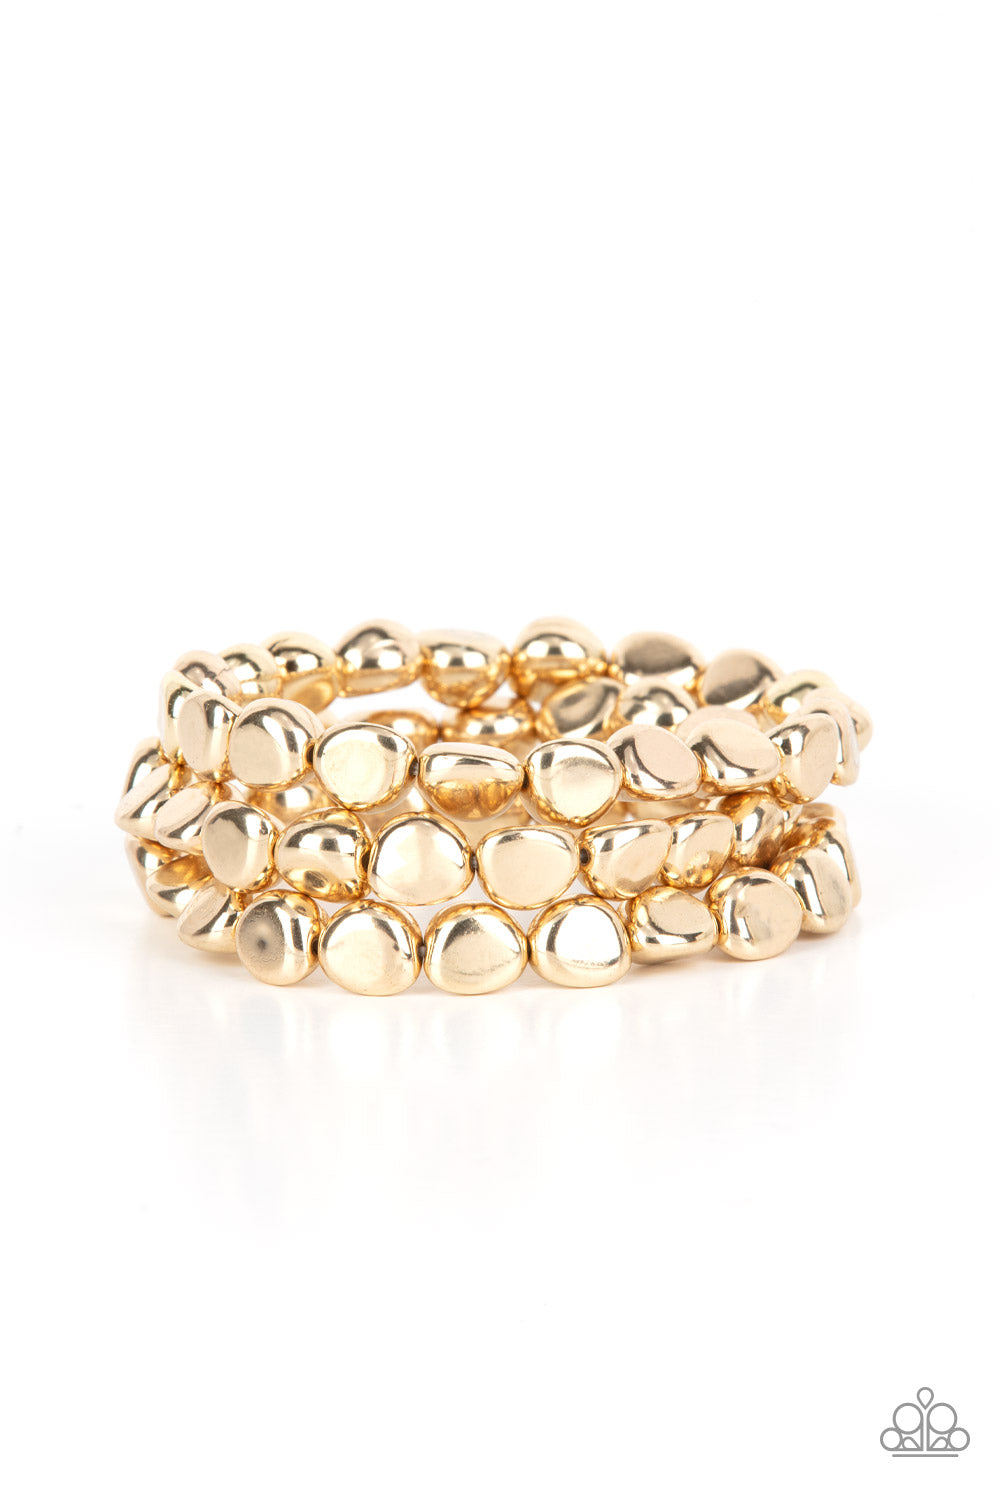 Paparazzi HAUTE Stone - Gold Bracelet - A Finishing Touch Jewelry